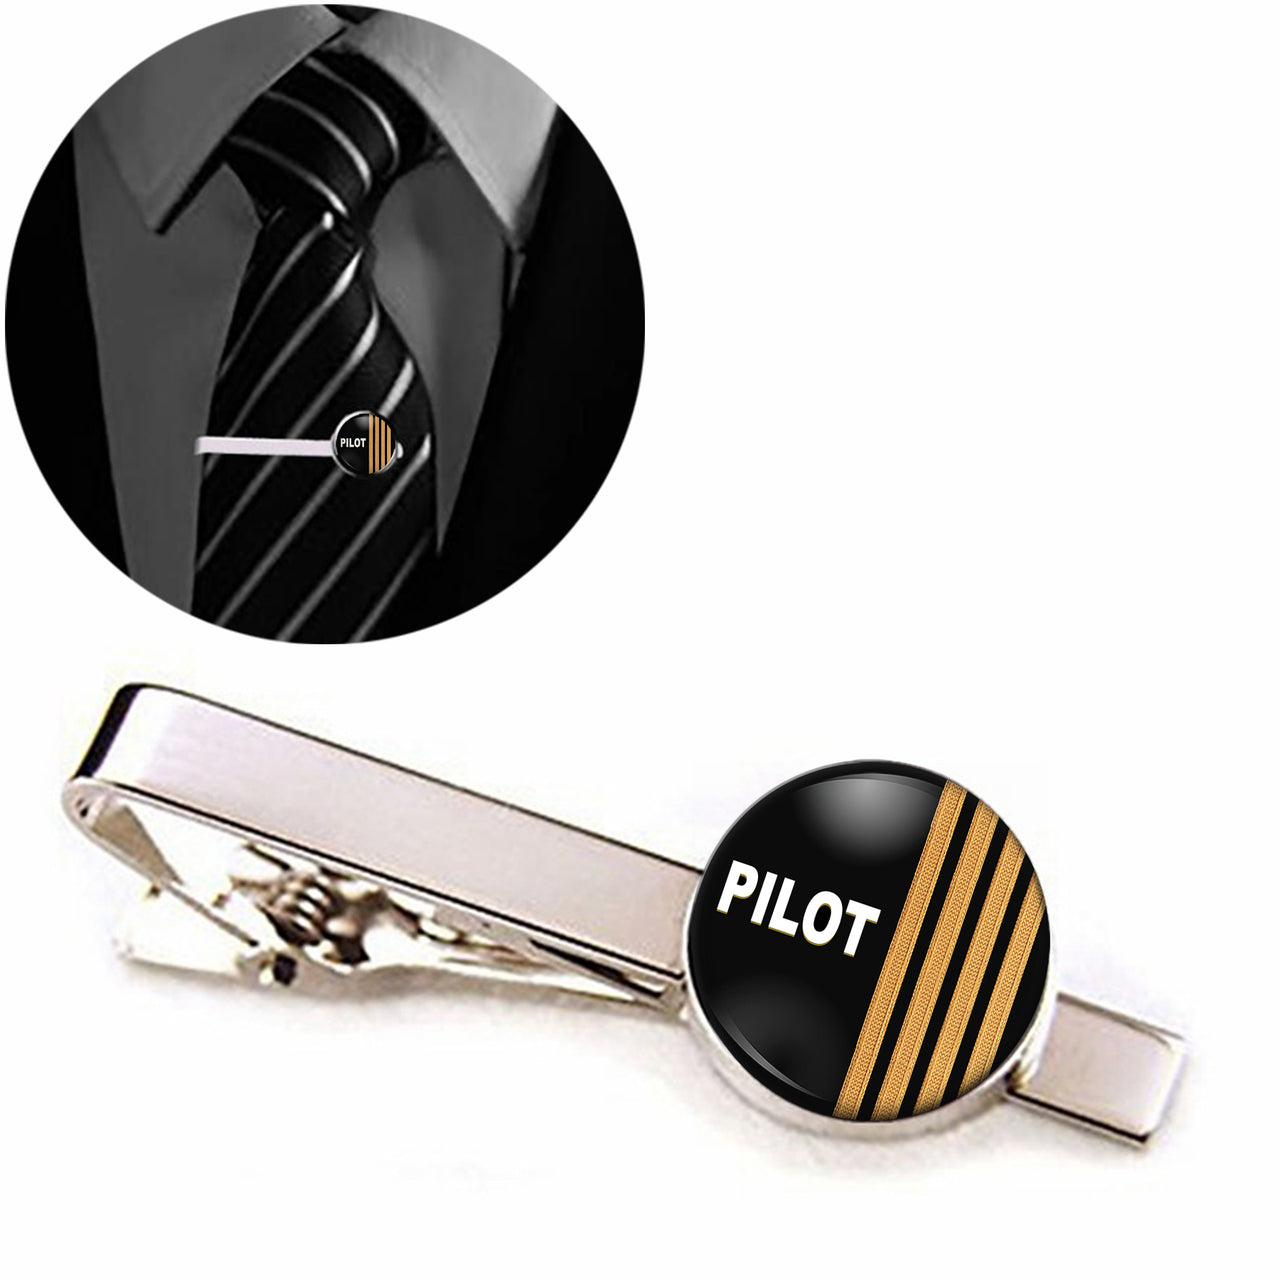 PILOT & Epaulettes 4 Lines Designed Tie Clips